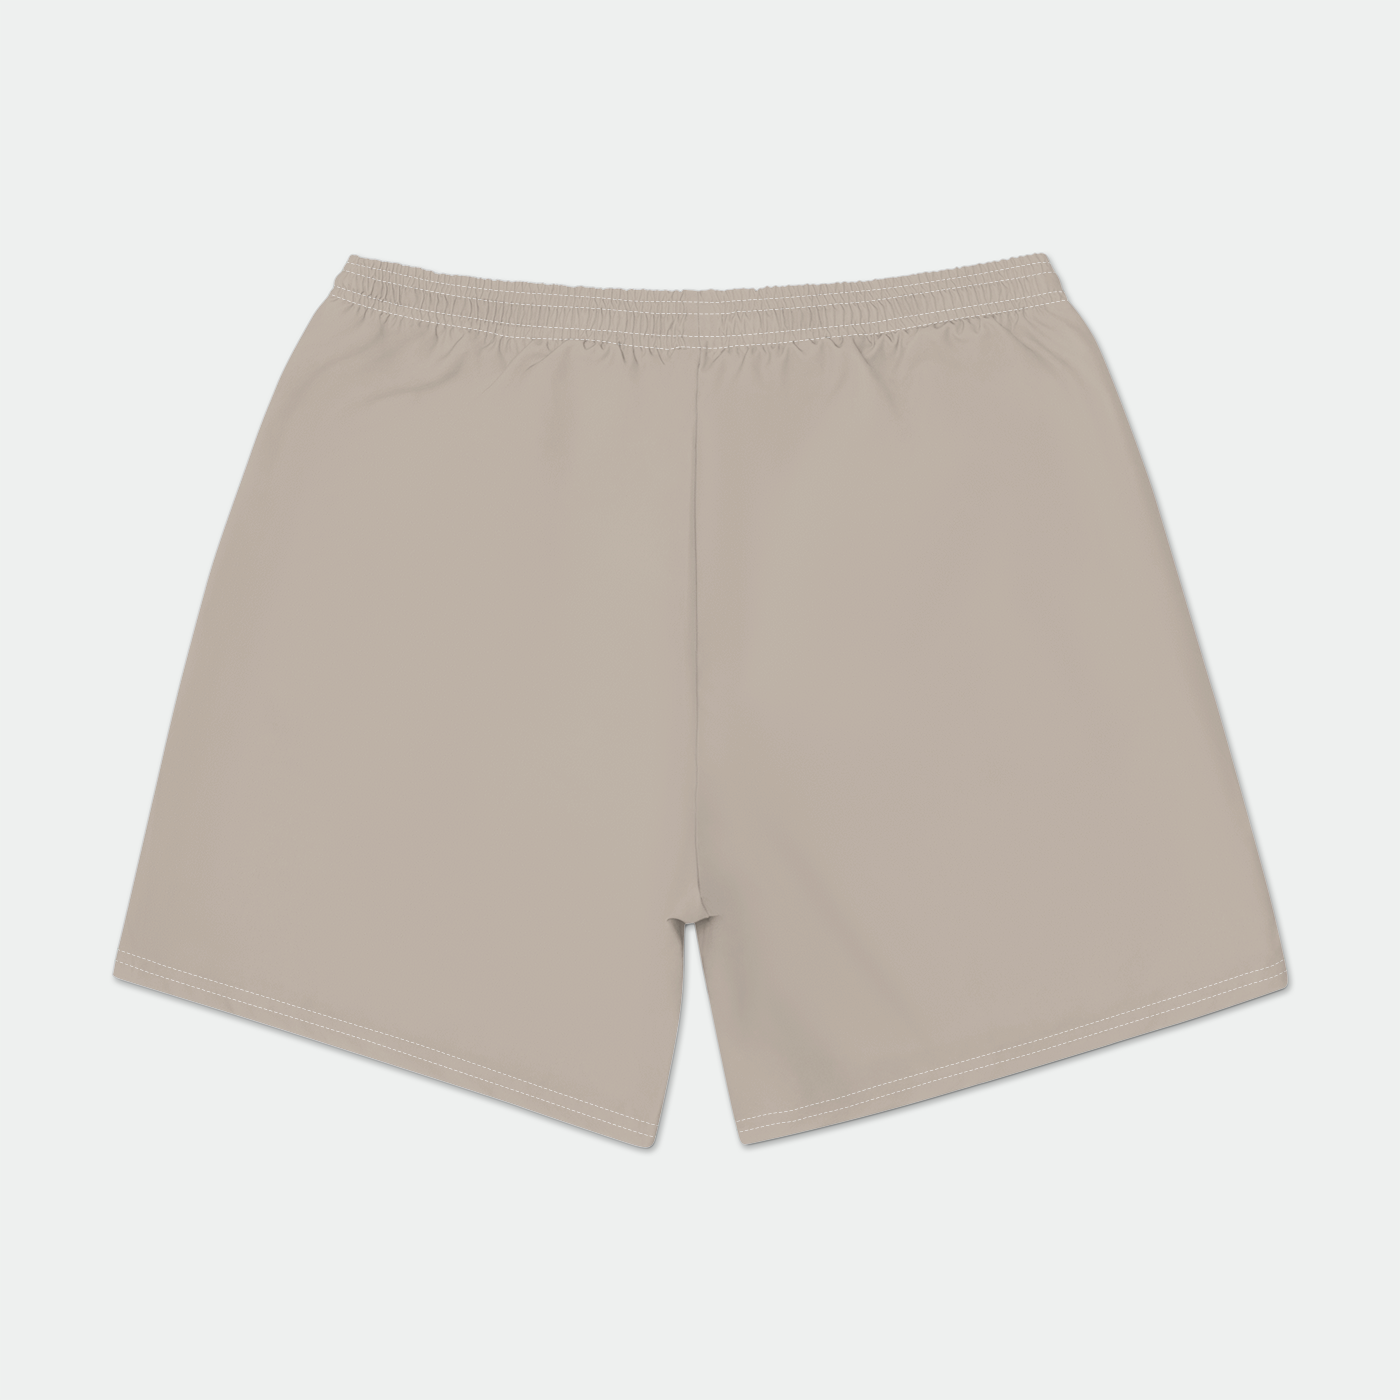 Latte Tan Hybrid Shorts